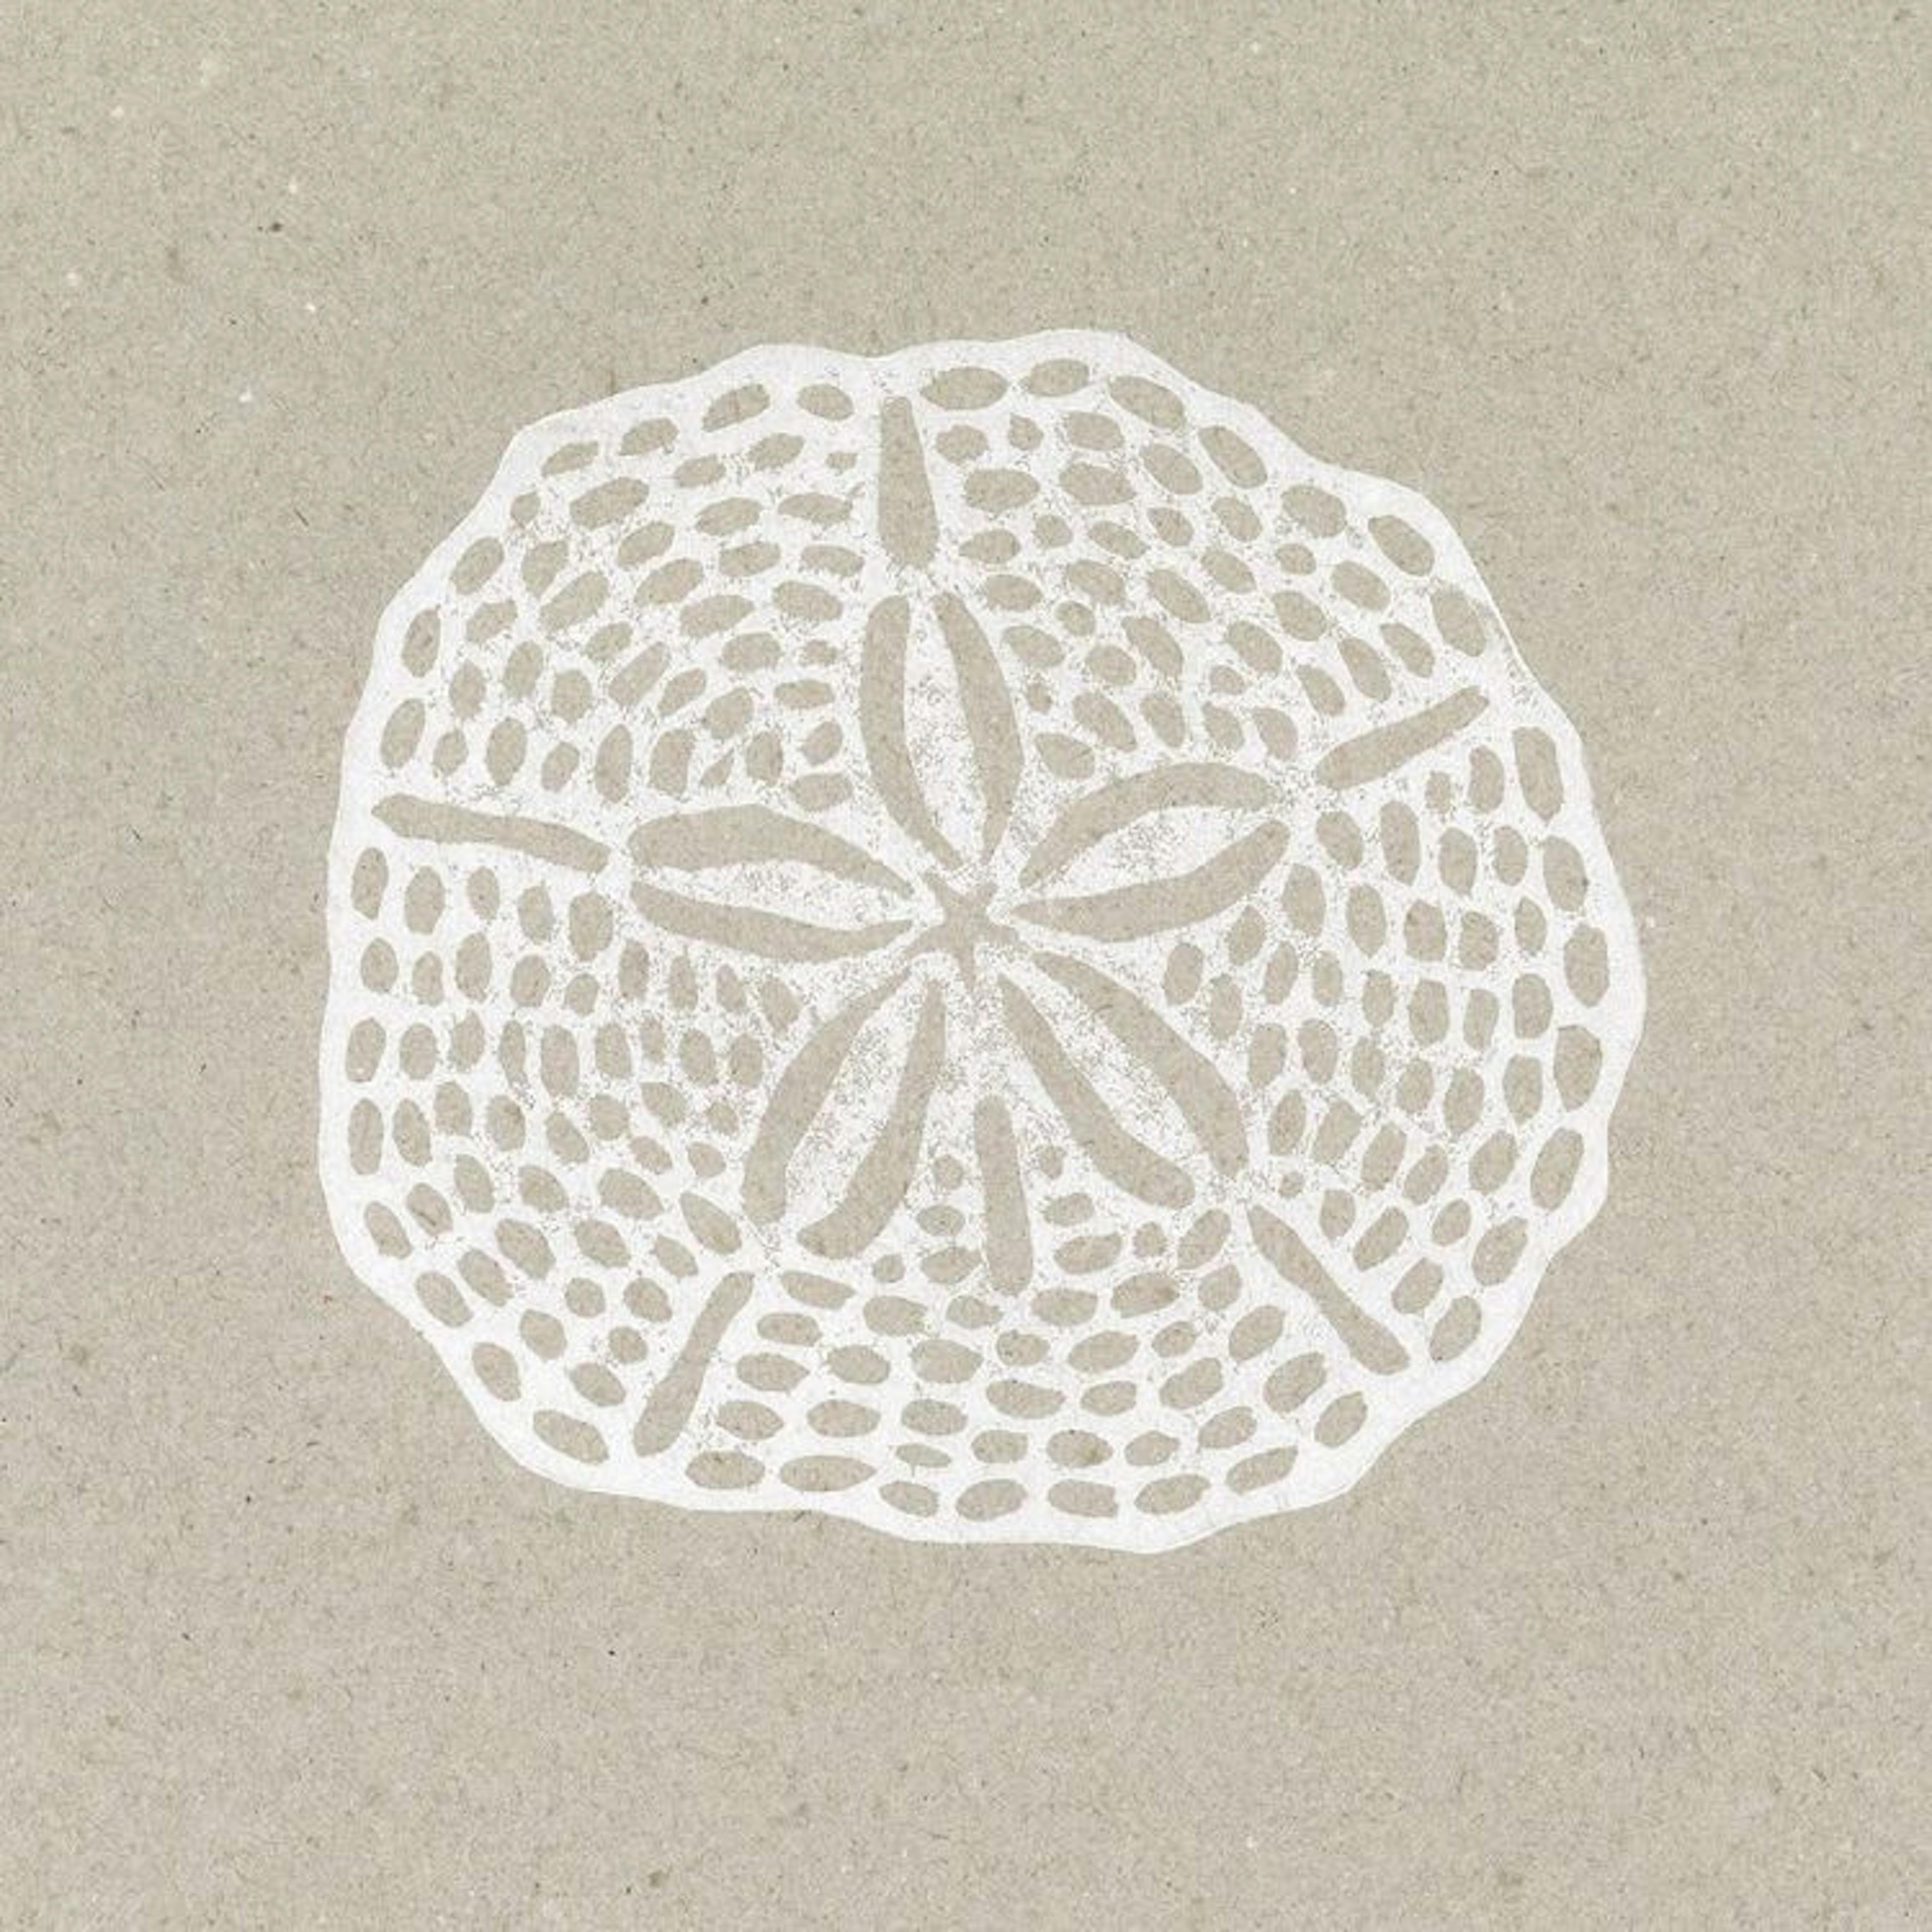 Linocut Sand Dollar Print 0